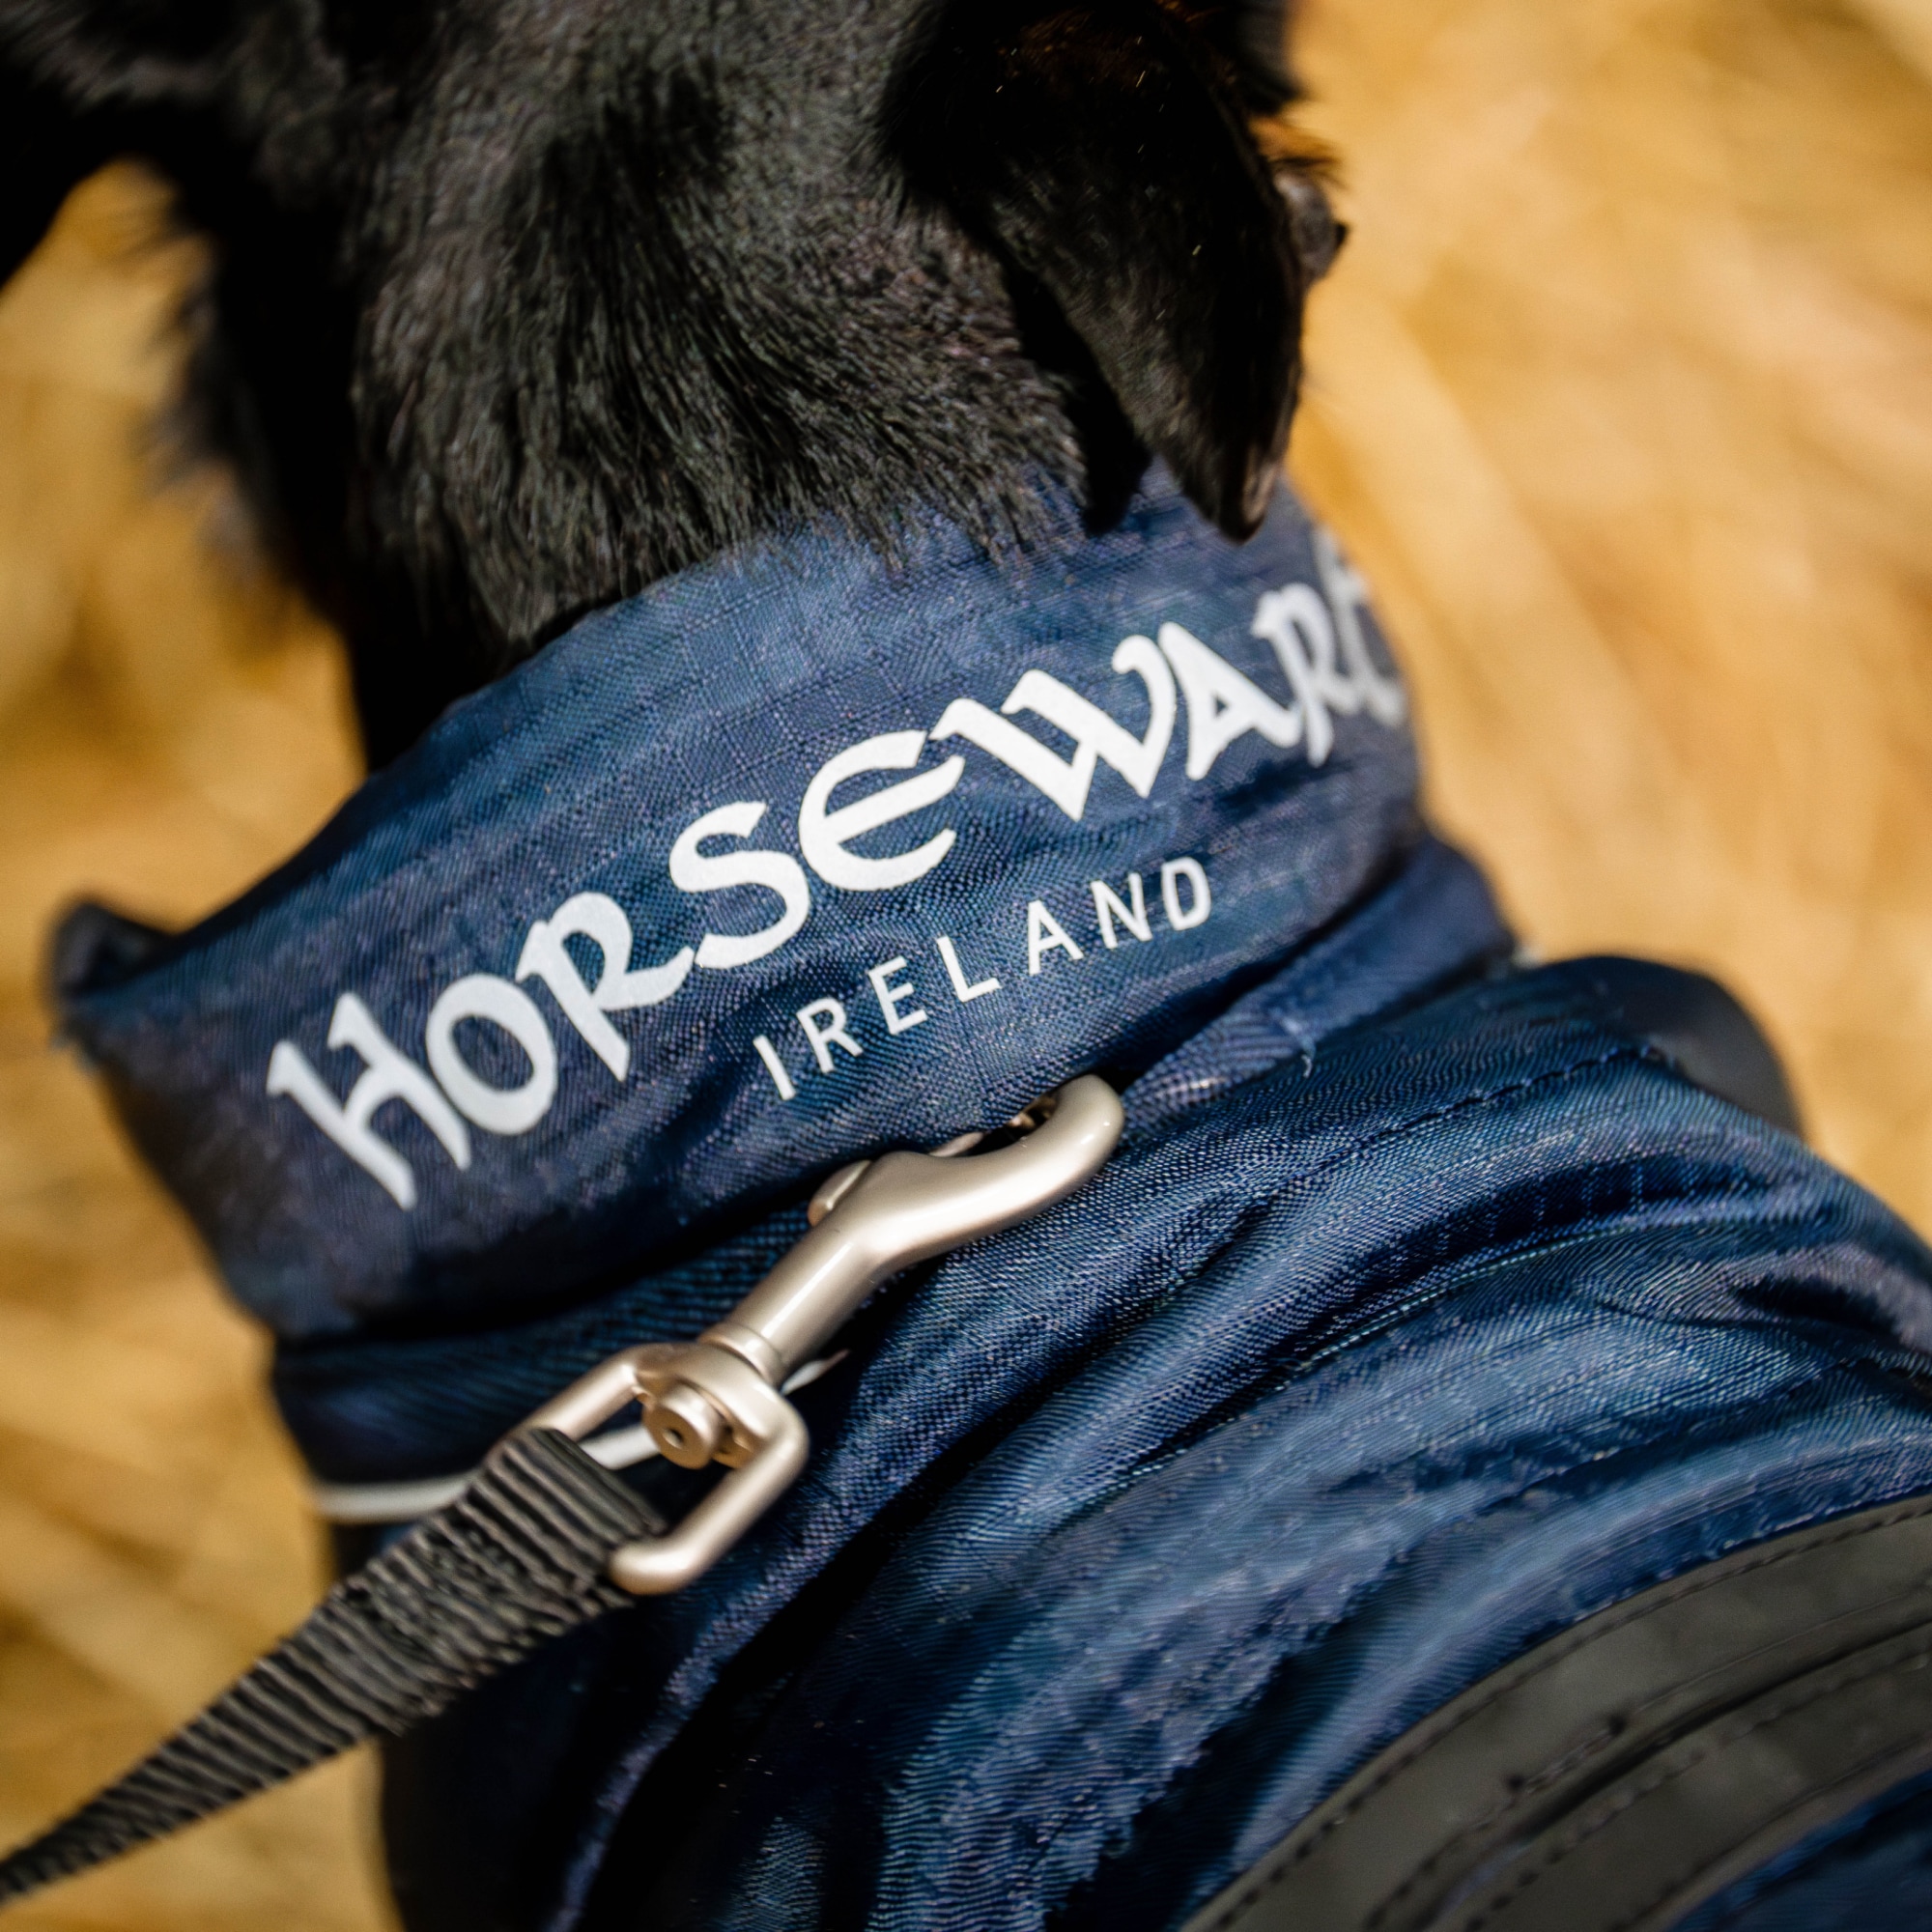 Horseware Signature Dog Blanket